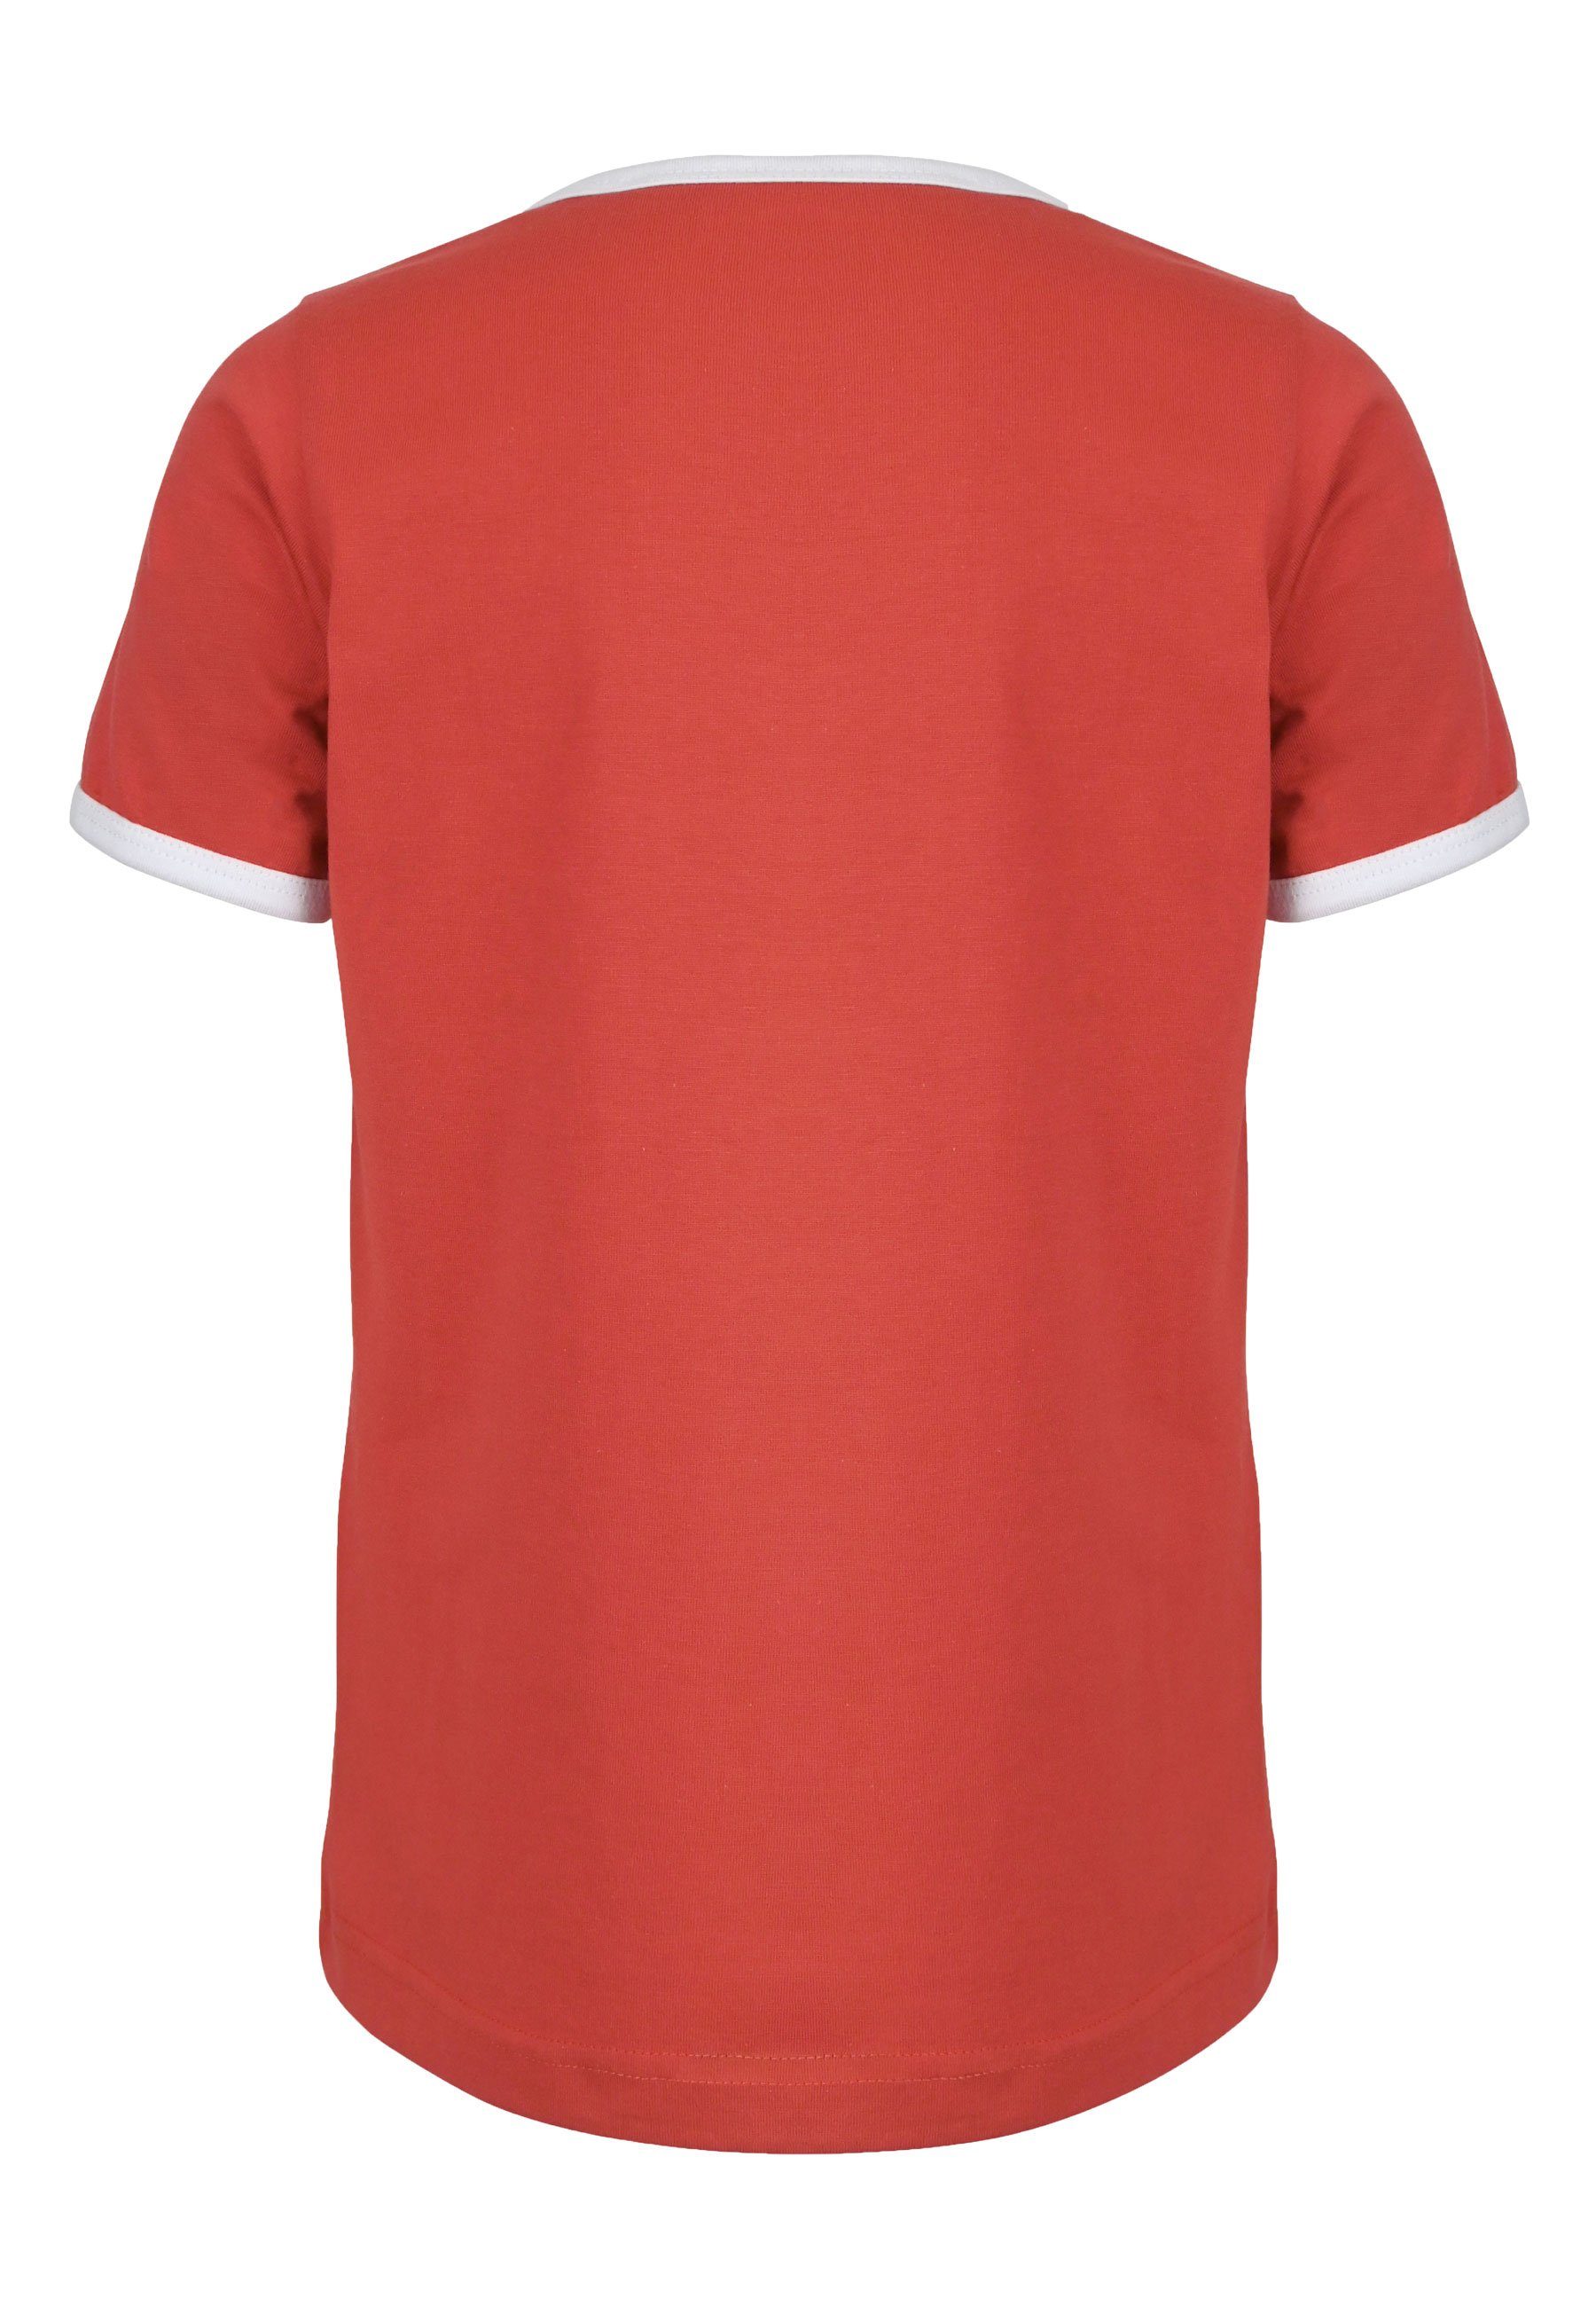 Print T-Shirt Strand mandarin Fahrrad Zum tailliert leicht Elkline Brust